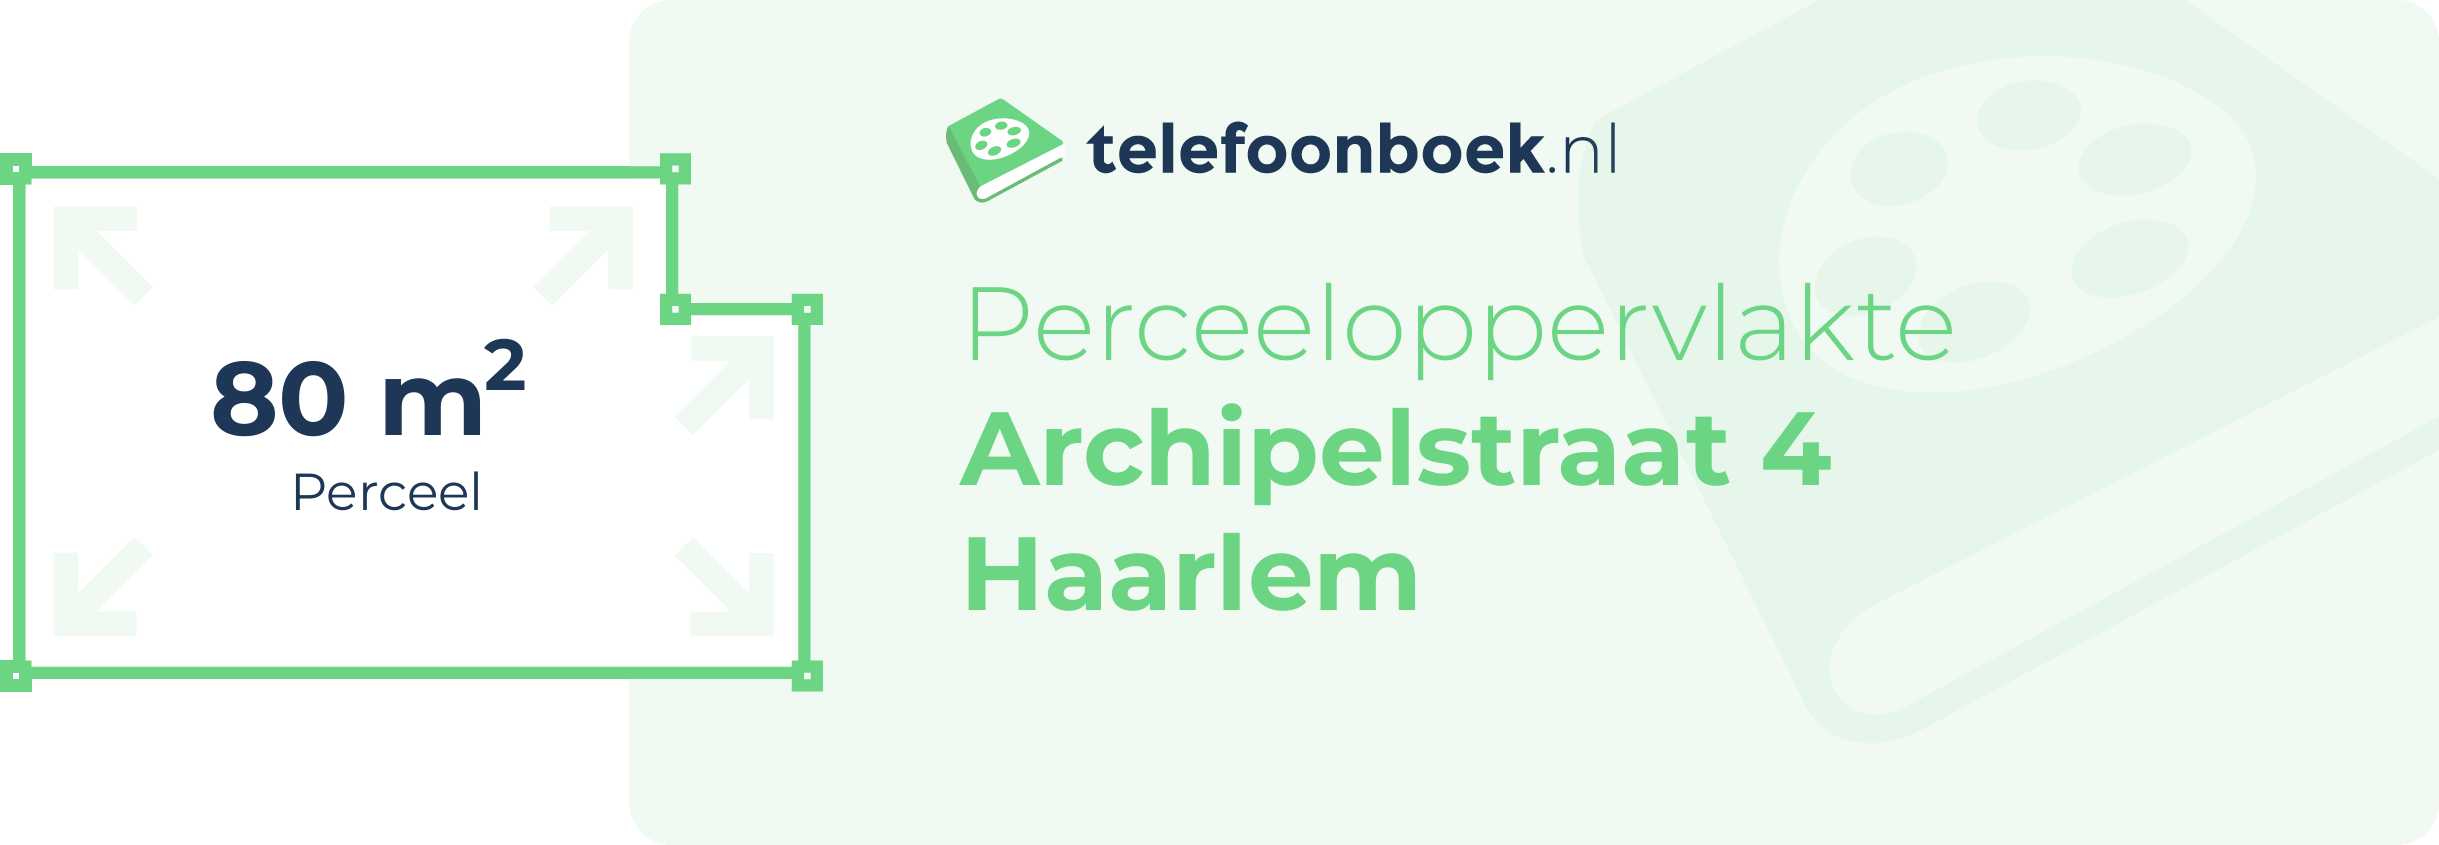 Perceeloppervlakte Archipelstraat 4 Haarlem